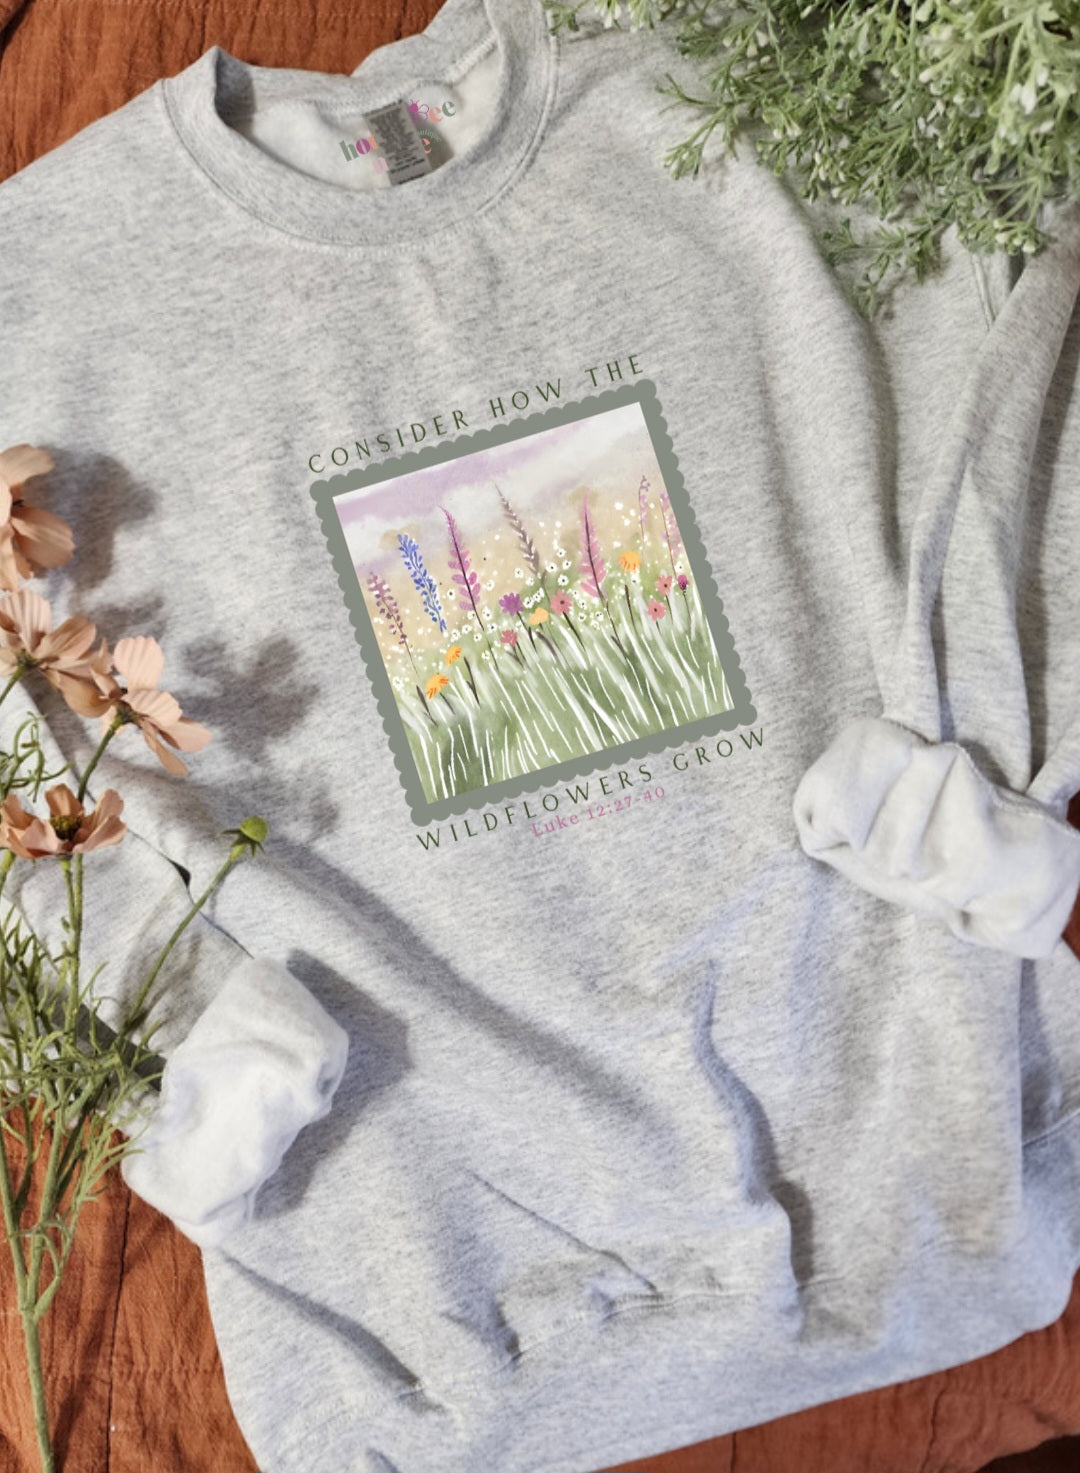 Consider How The Wildflowers Grow. Grey Crewneck Sweatshirt.